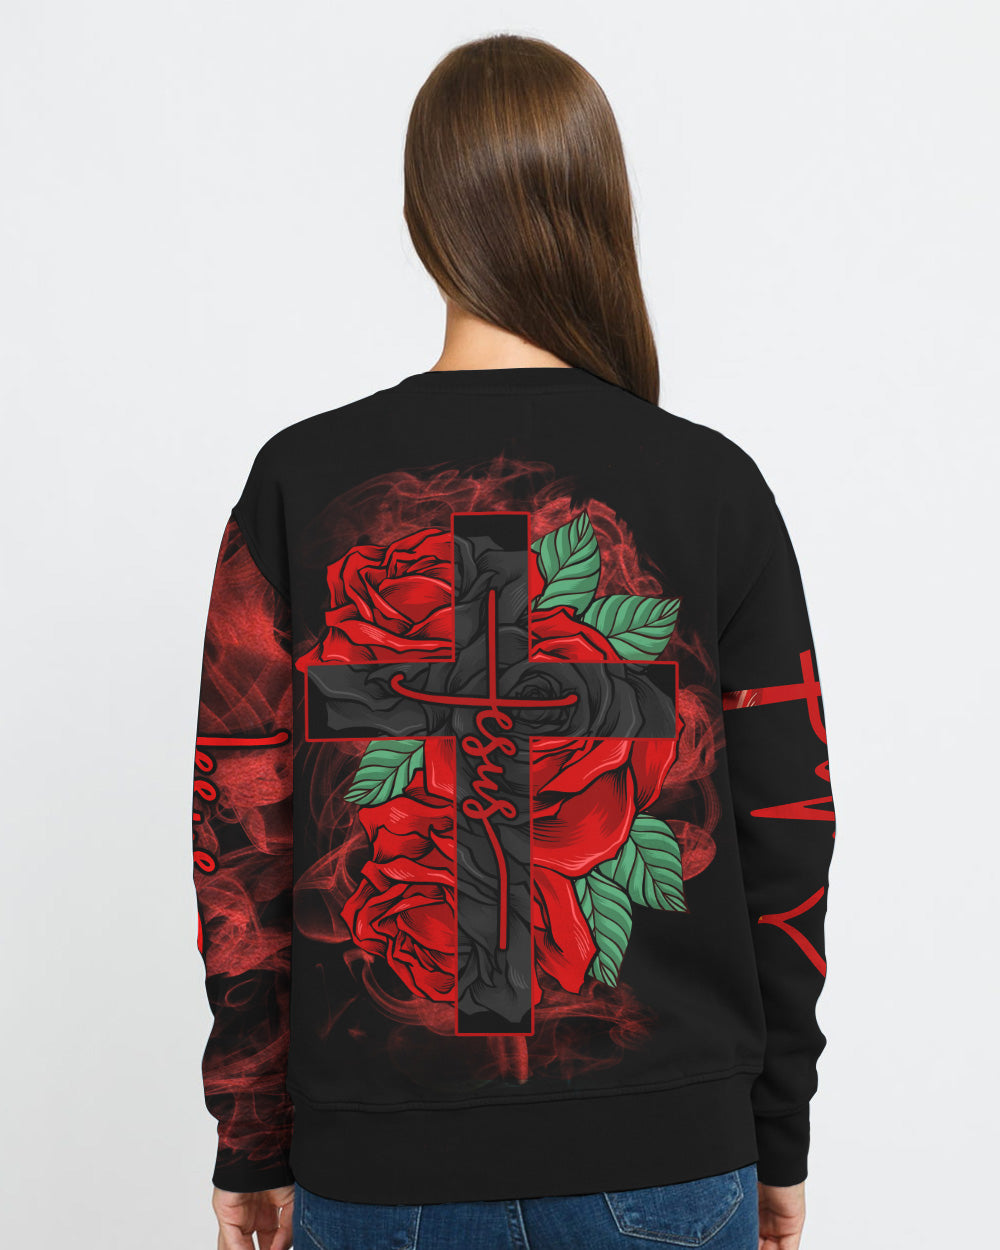 Jesus Cross Red Rose Women's Christian Sweatshirt